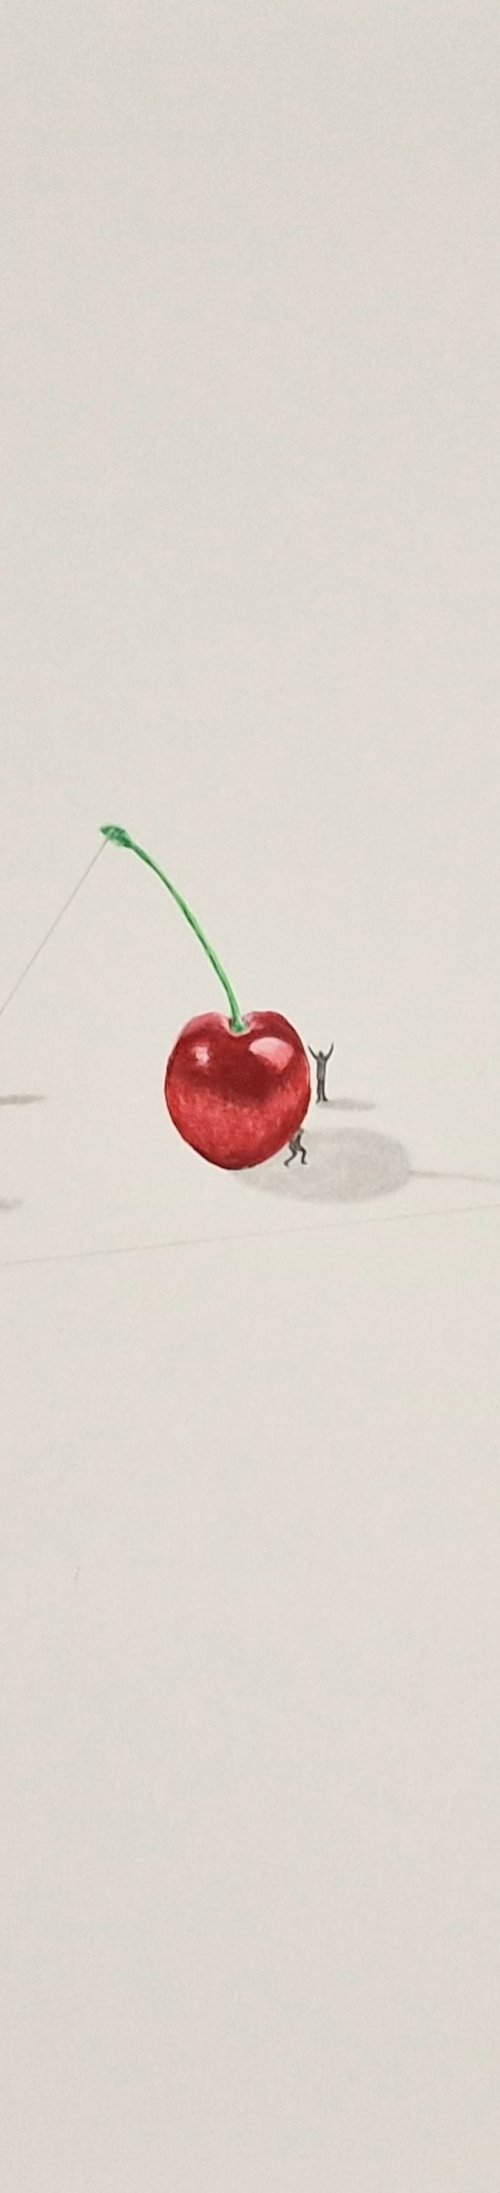 Cherry Pickers by Daniel Shipton